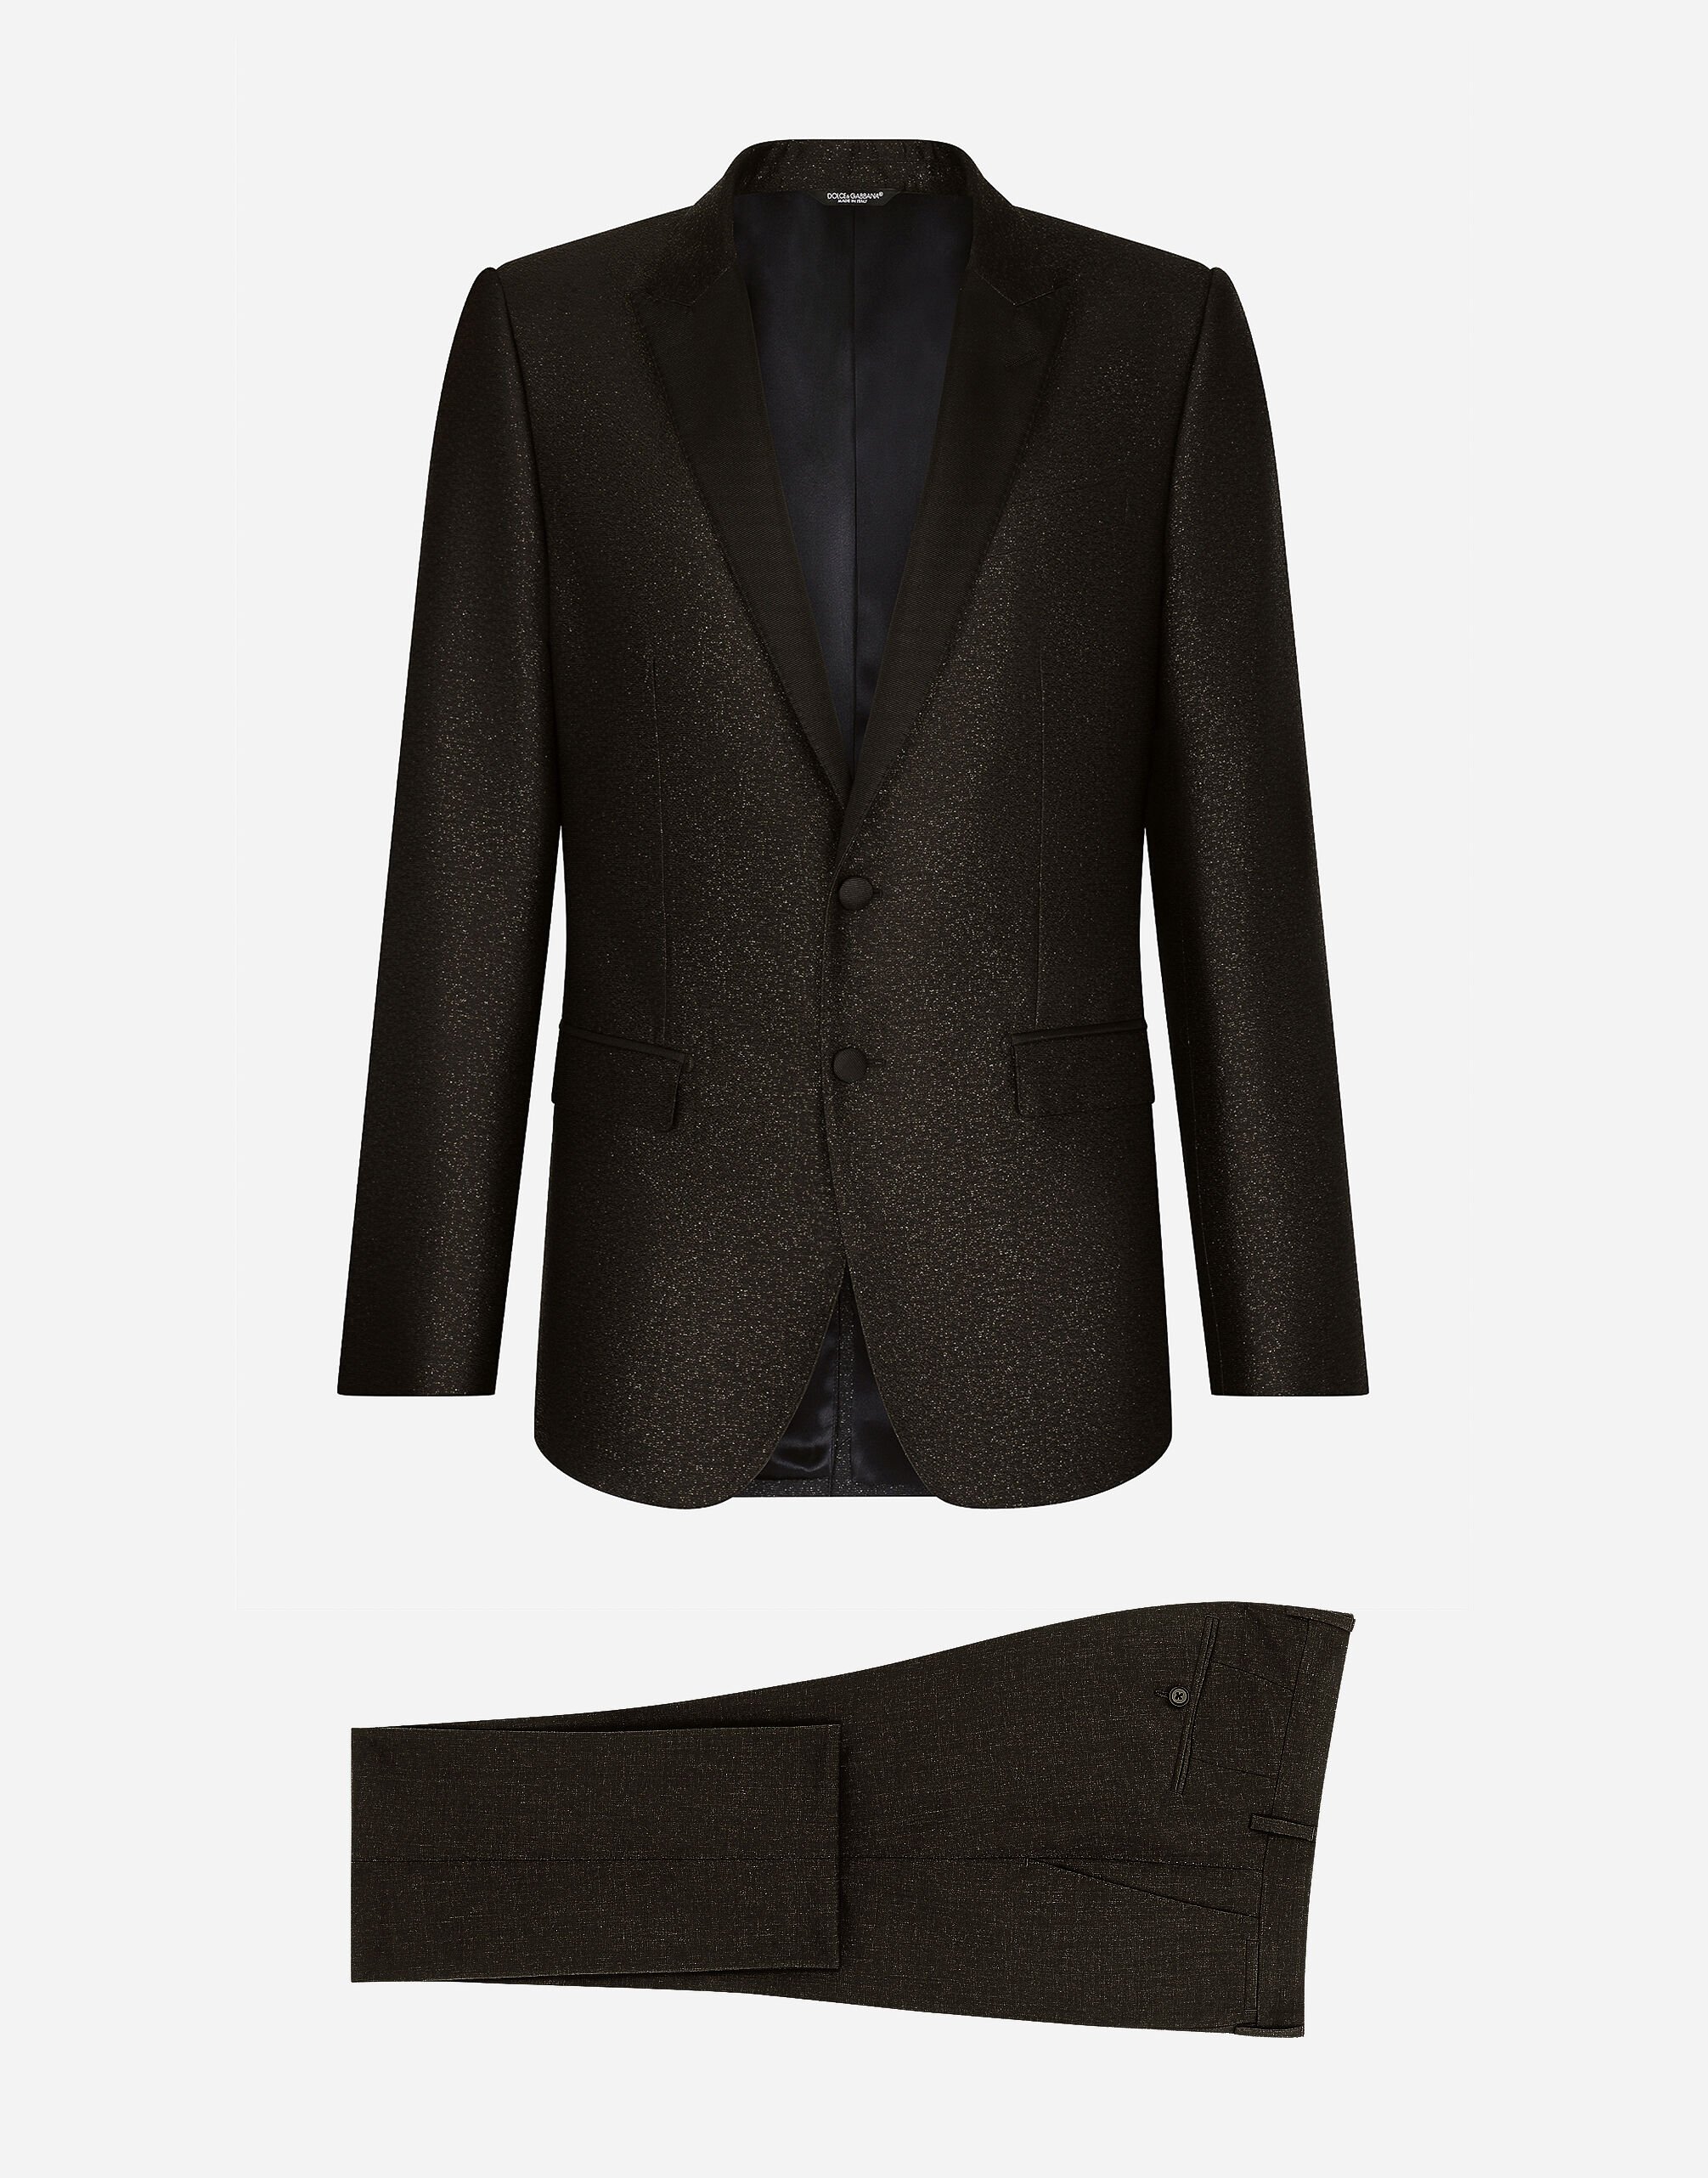 Dolce & Gabbana بدلة توكسيدو حرير جاكار لاميه بقصة مارتيني أسود GK0RMTGG059